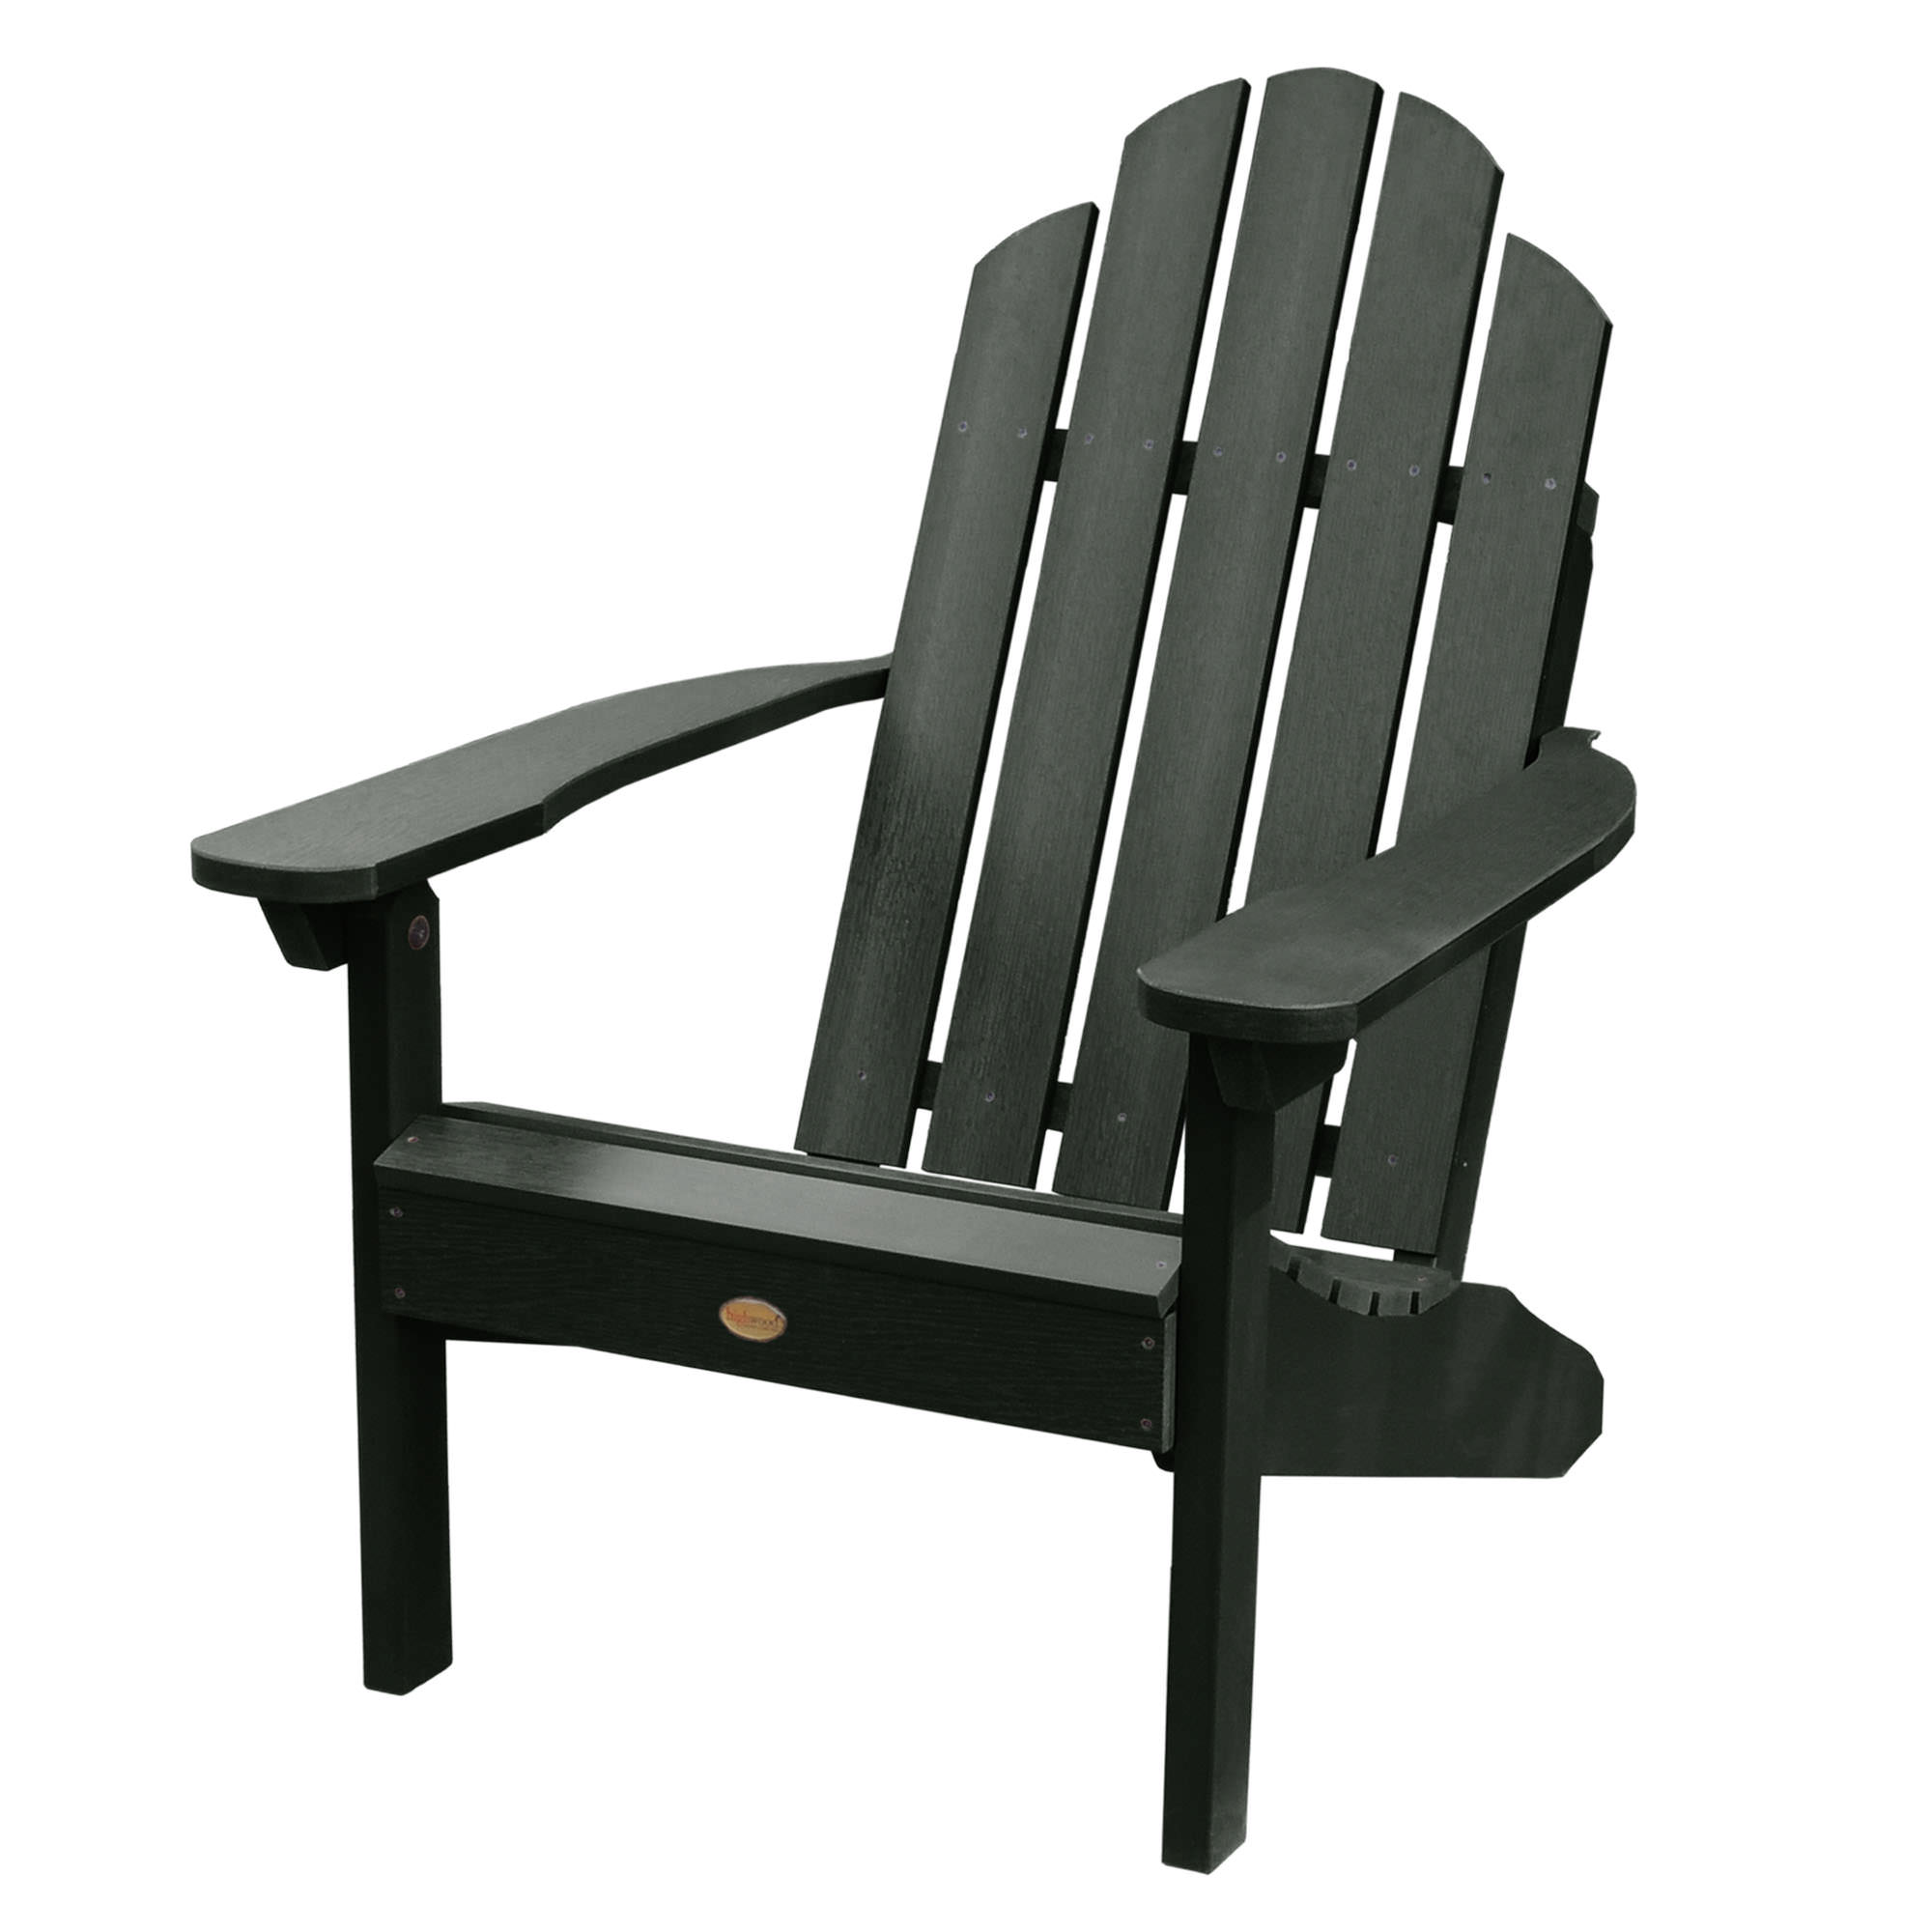 2 Classic Westport Adirondack Chairs, 1 Classic Westport Coffee Table - image 3 of 6